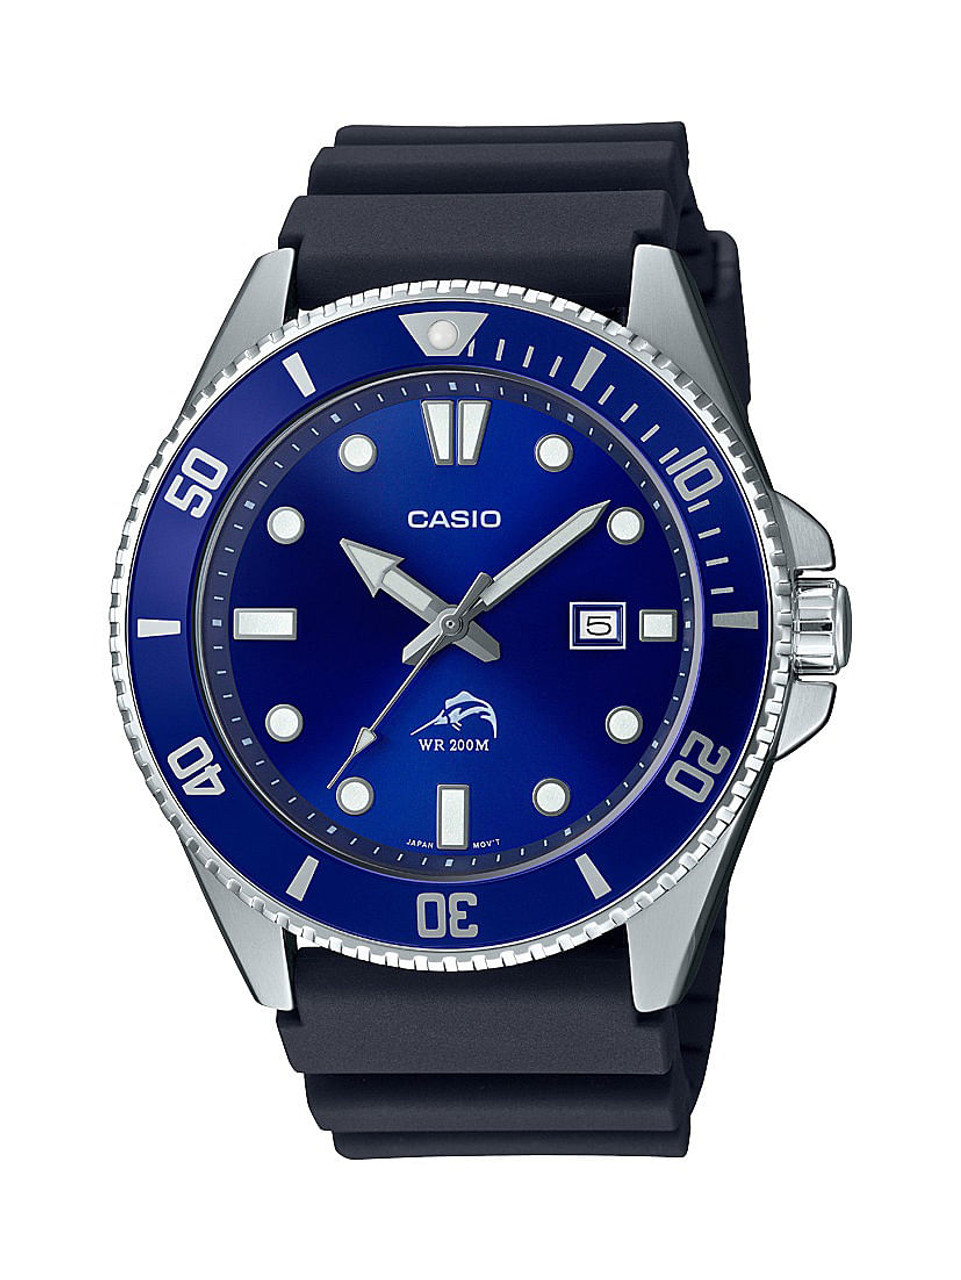 Casio Men's Diver Inspired Black Resin Strap Watch.........